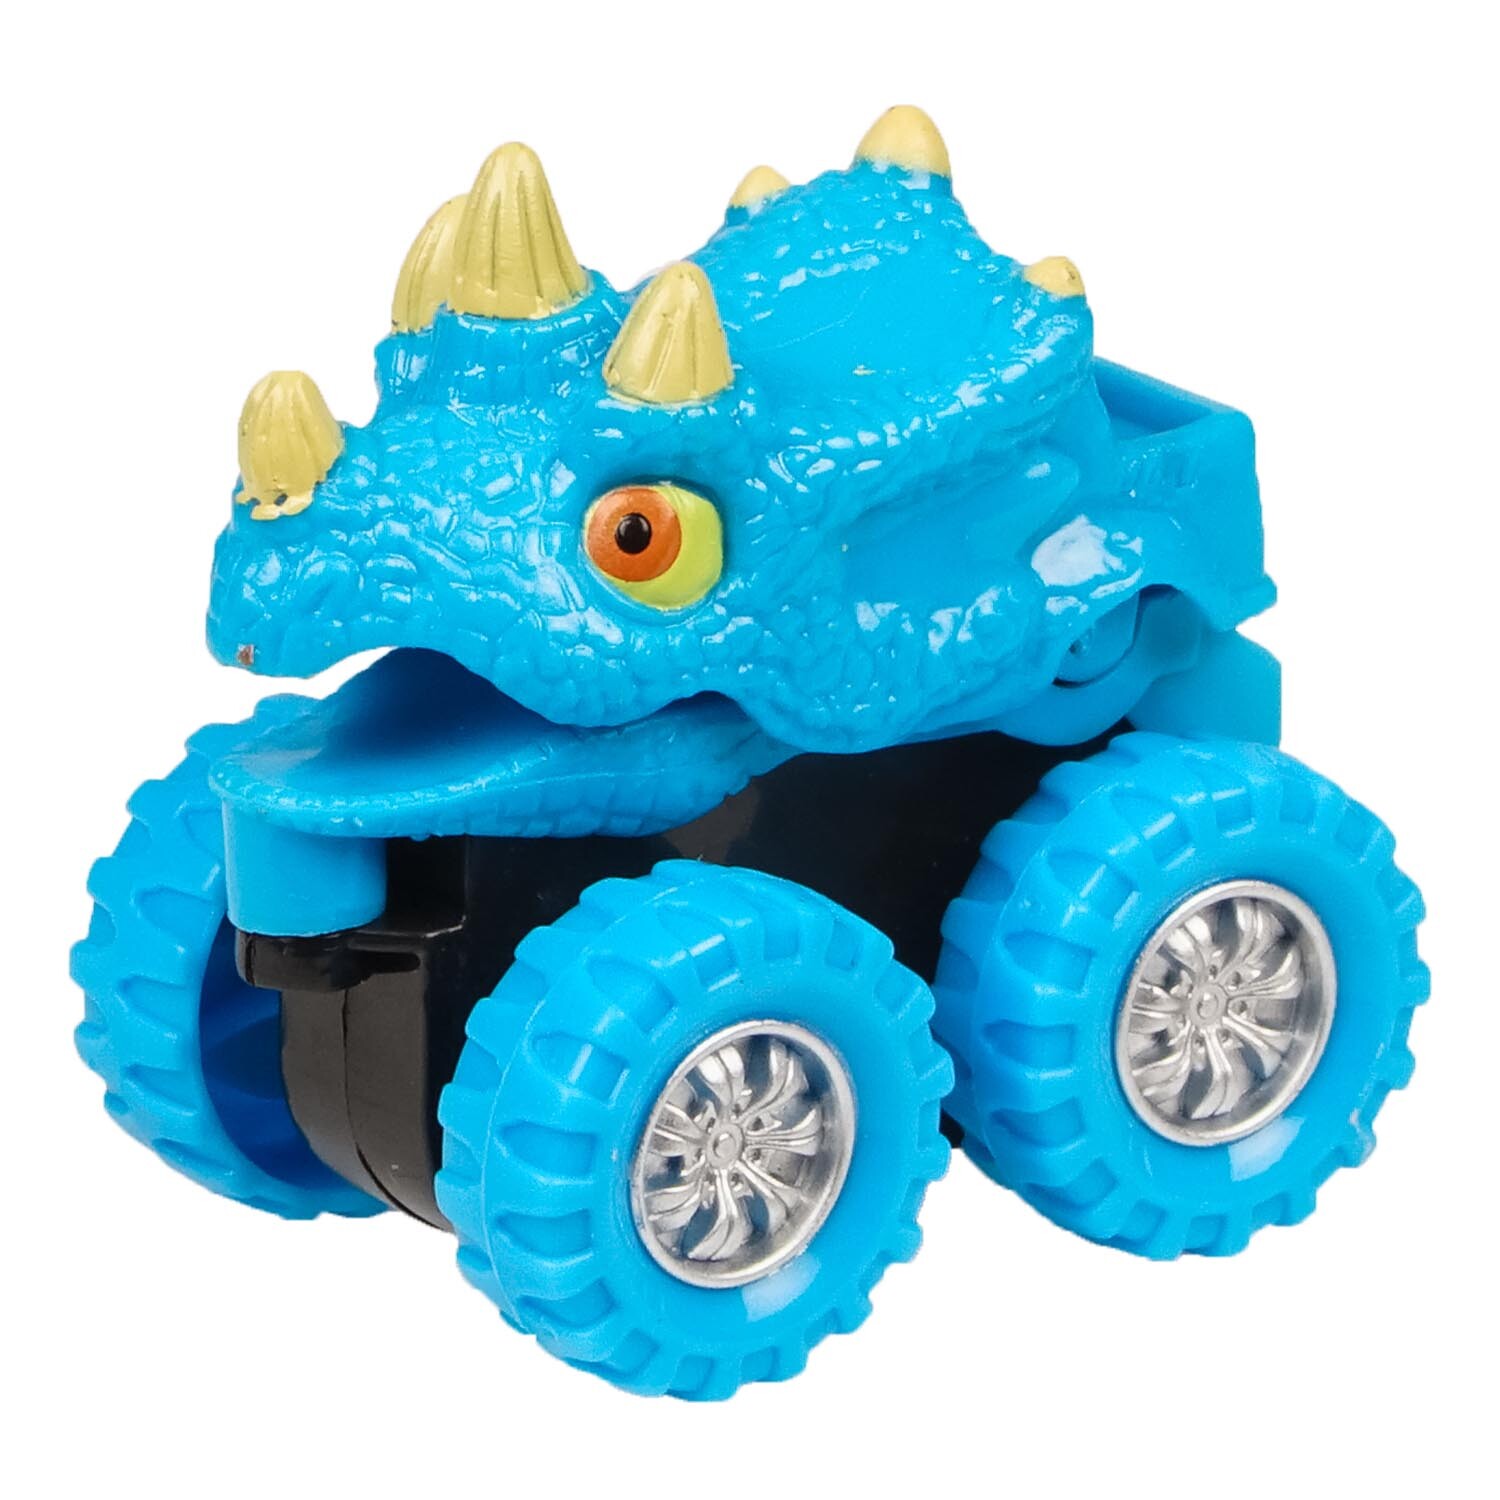 Tracksterz Multi Coloured Monster Trucks Toy 5 Pack Image 3